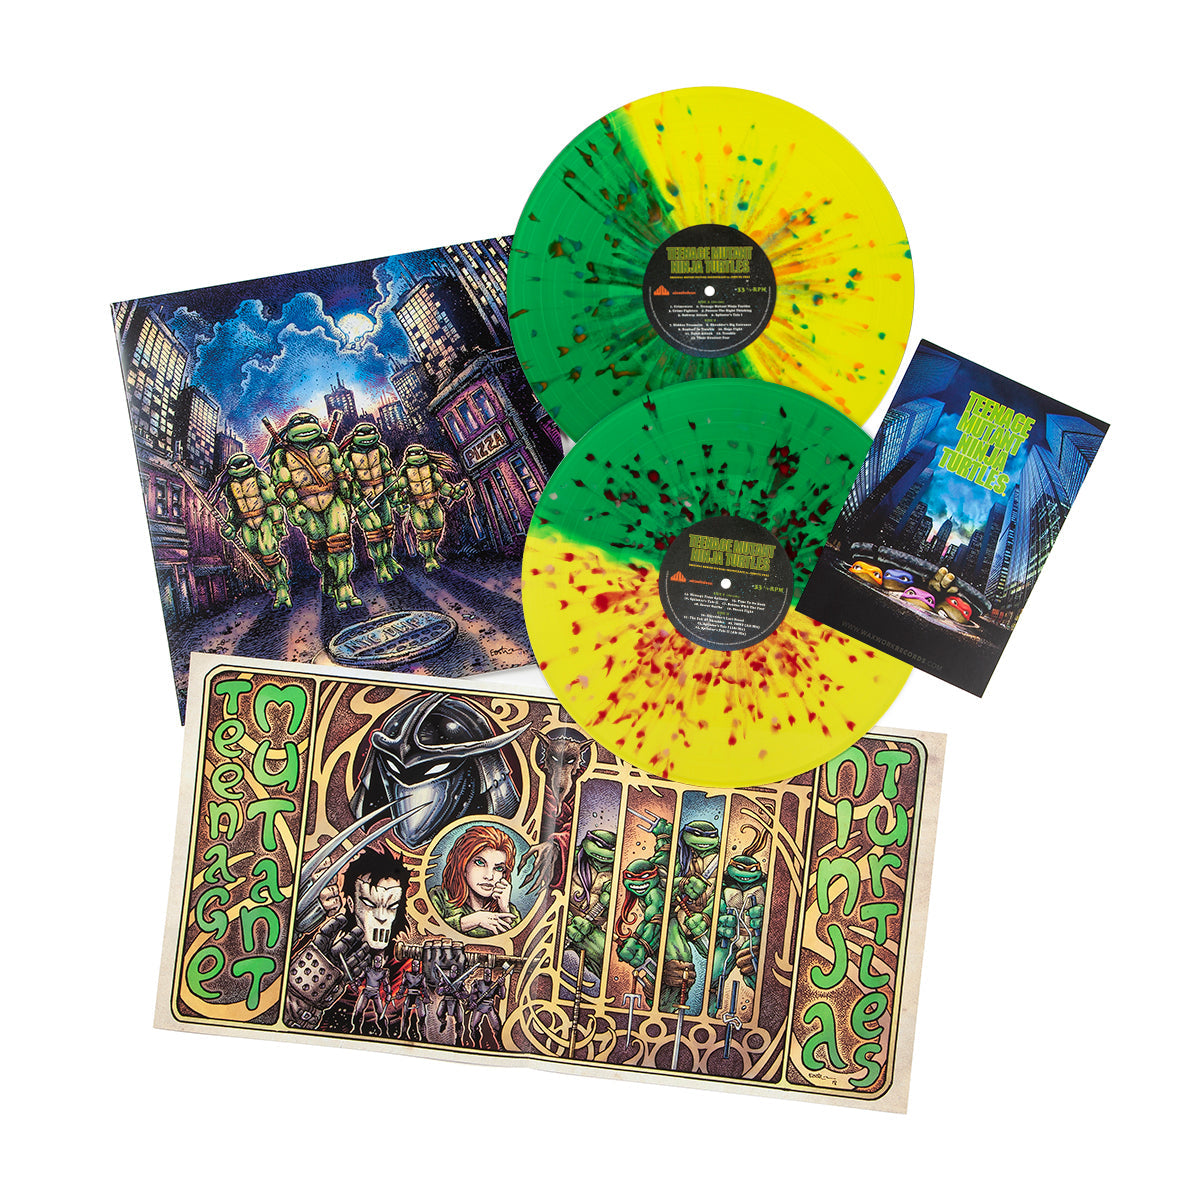 John Du Prez - Teenage Mutant Ninja Turtles (1990s) OST (Green/Yellow Turtle Mask Splatter Vinyl)